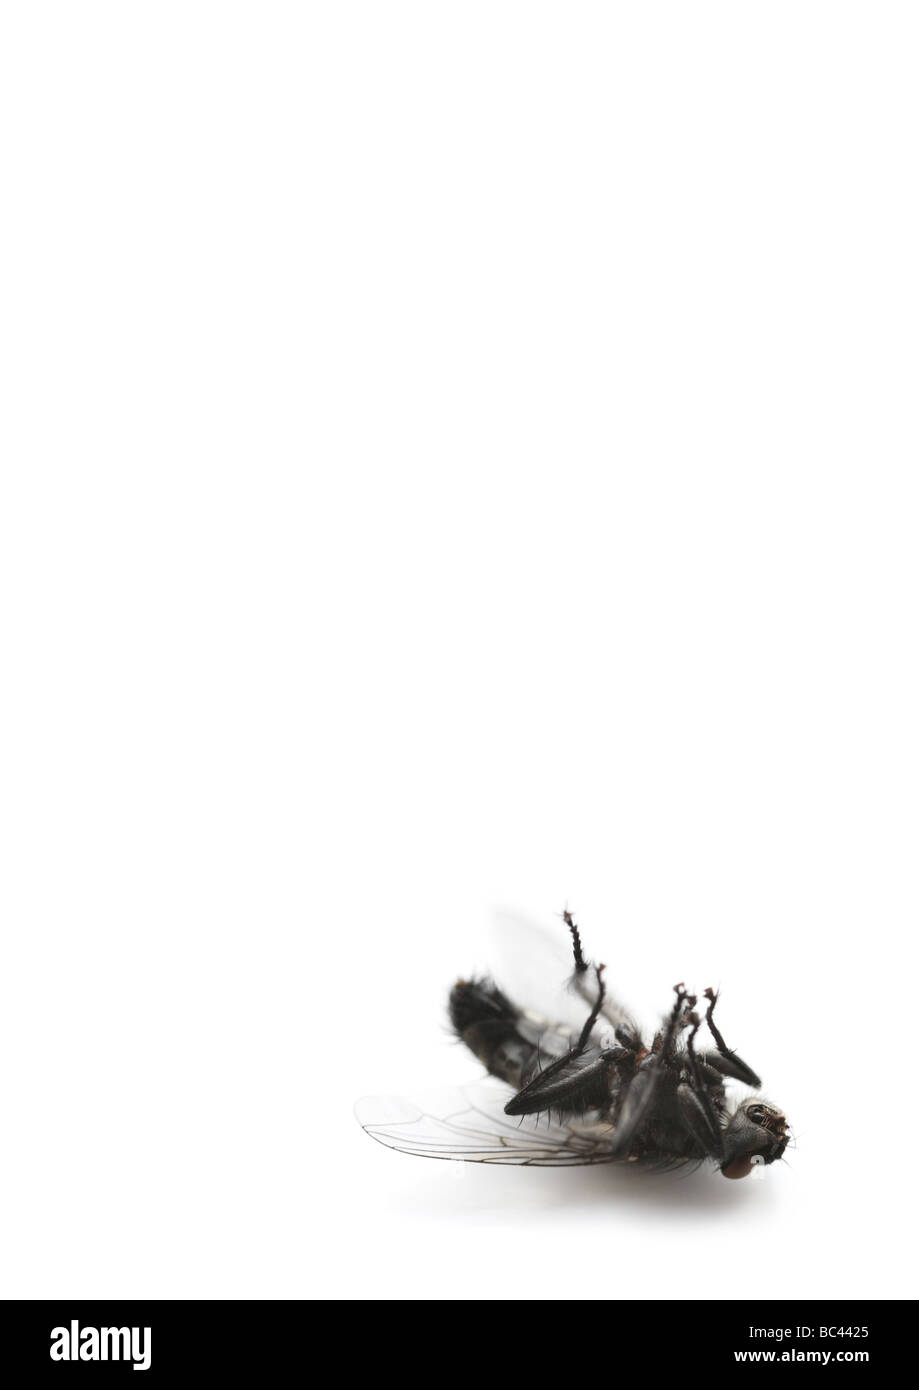 Muertos mosca común Foto de stock